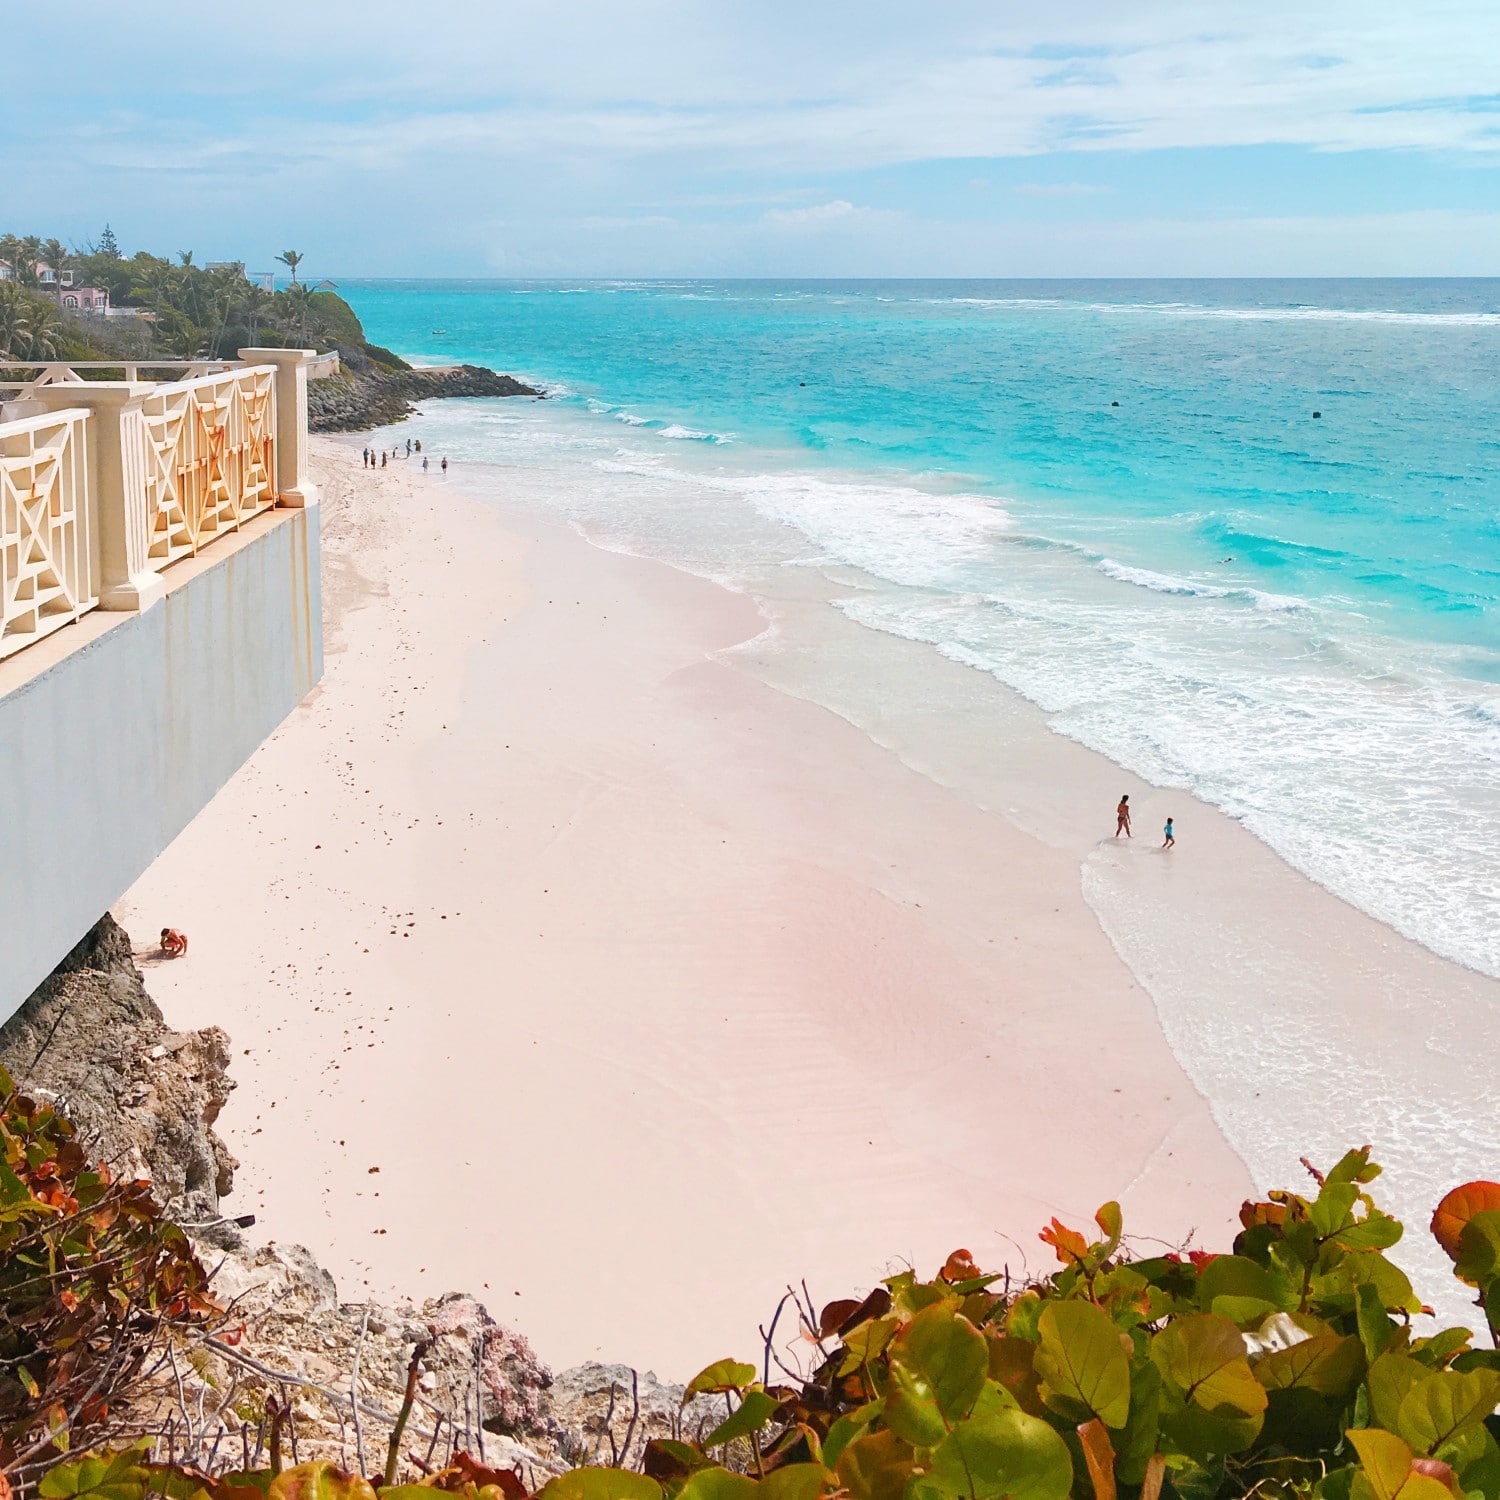 Crane Beach - Pink sand beach at The Crane Resort photo by Julianna Barnaby